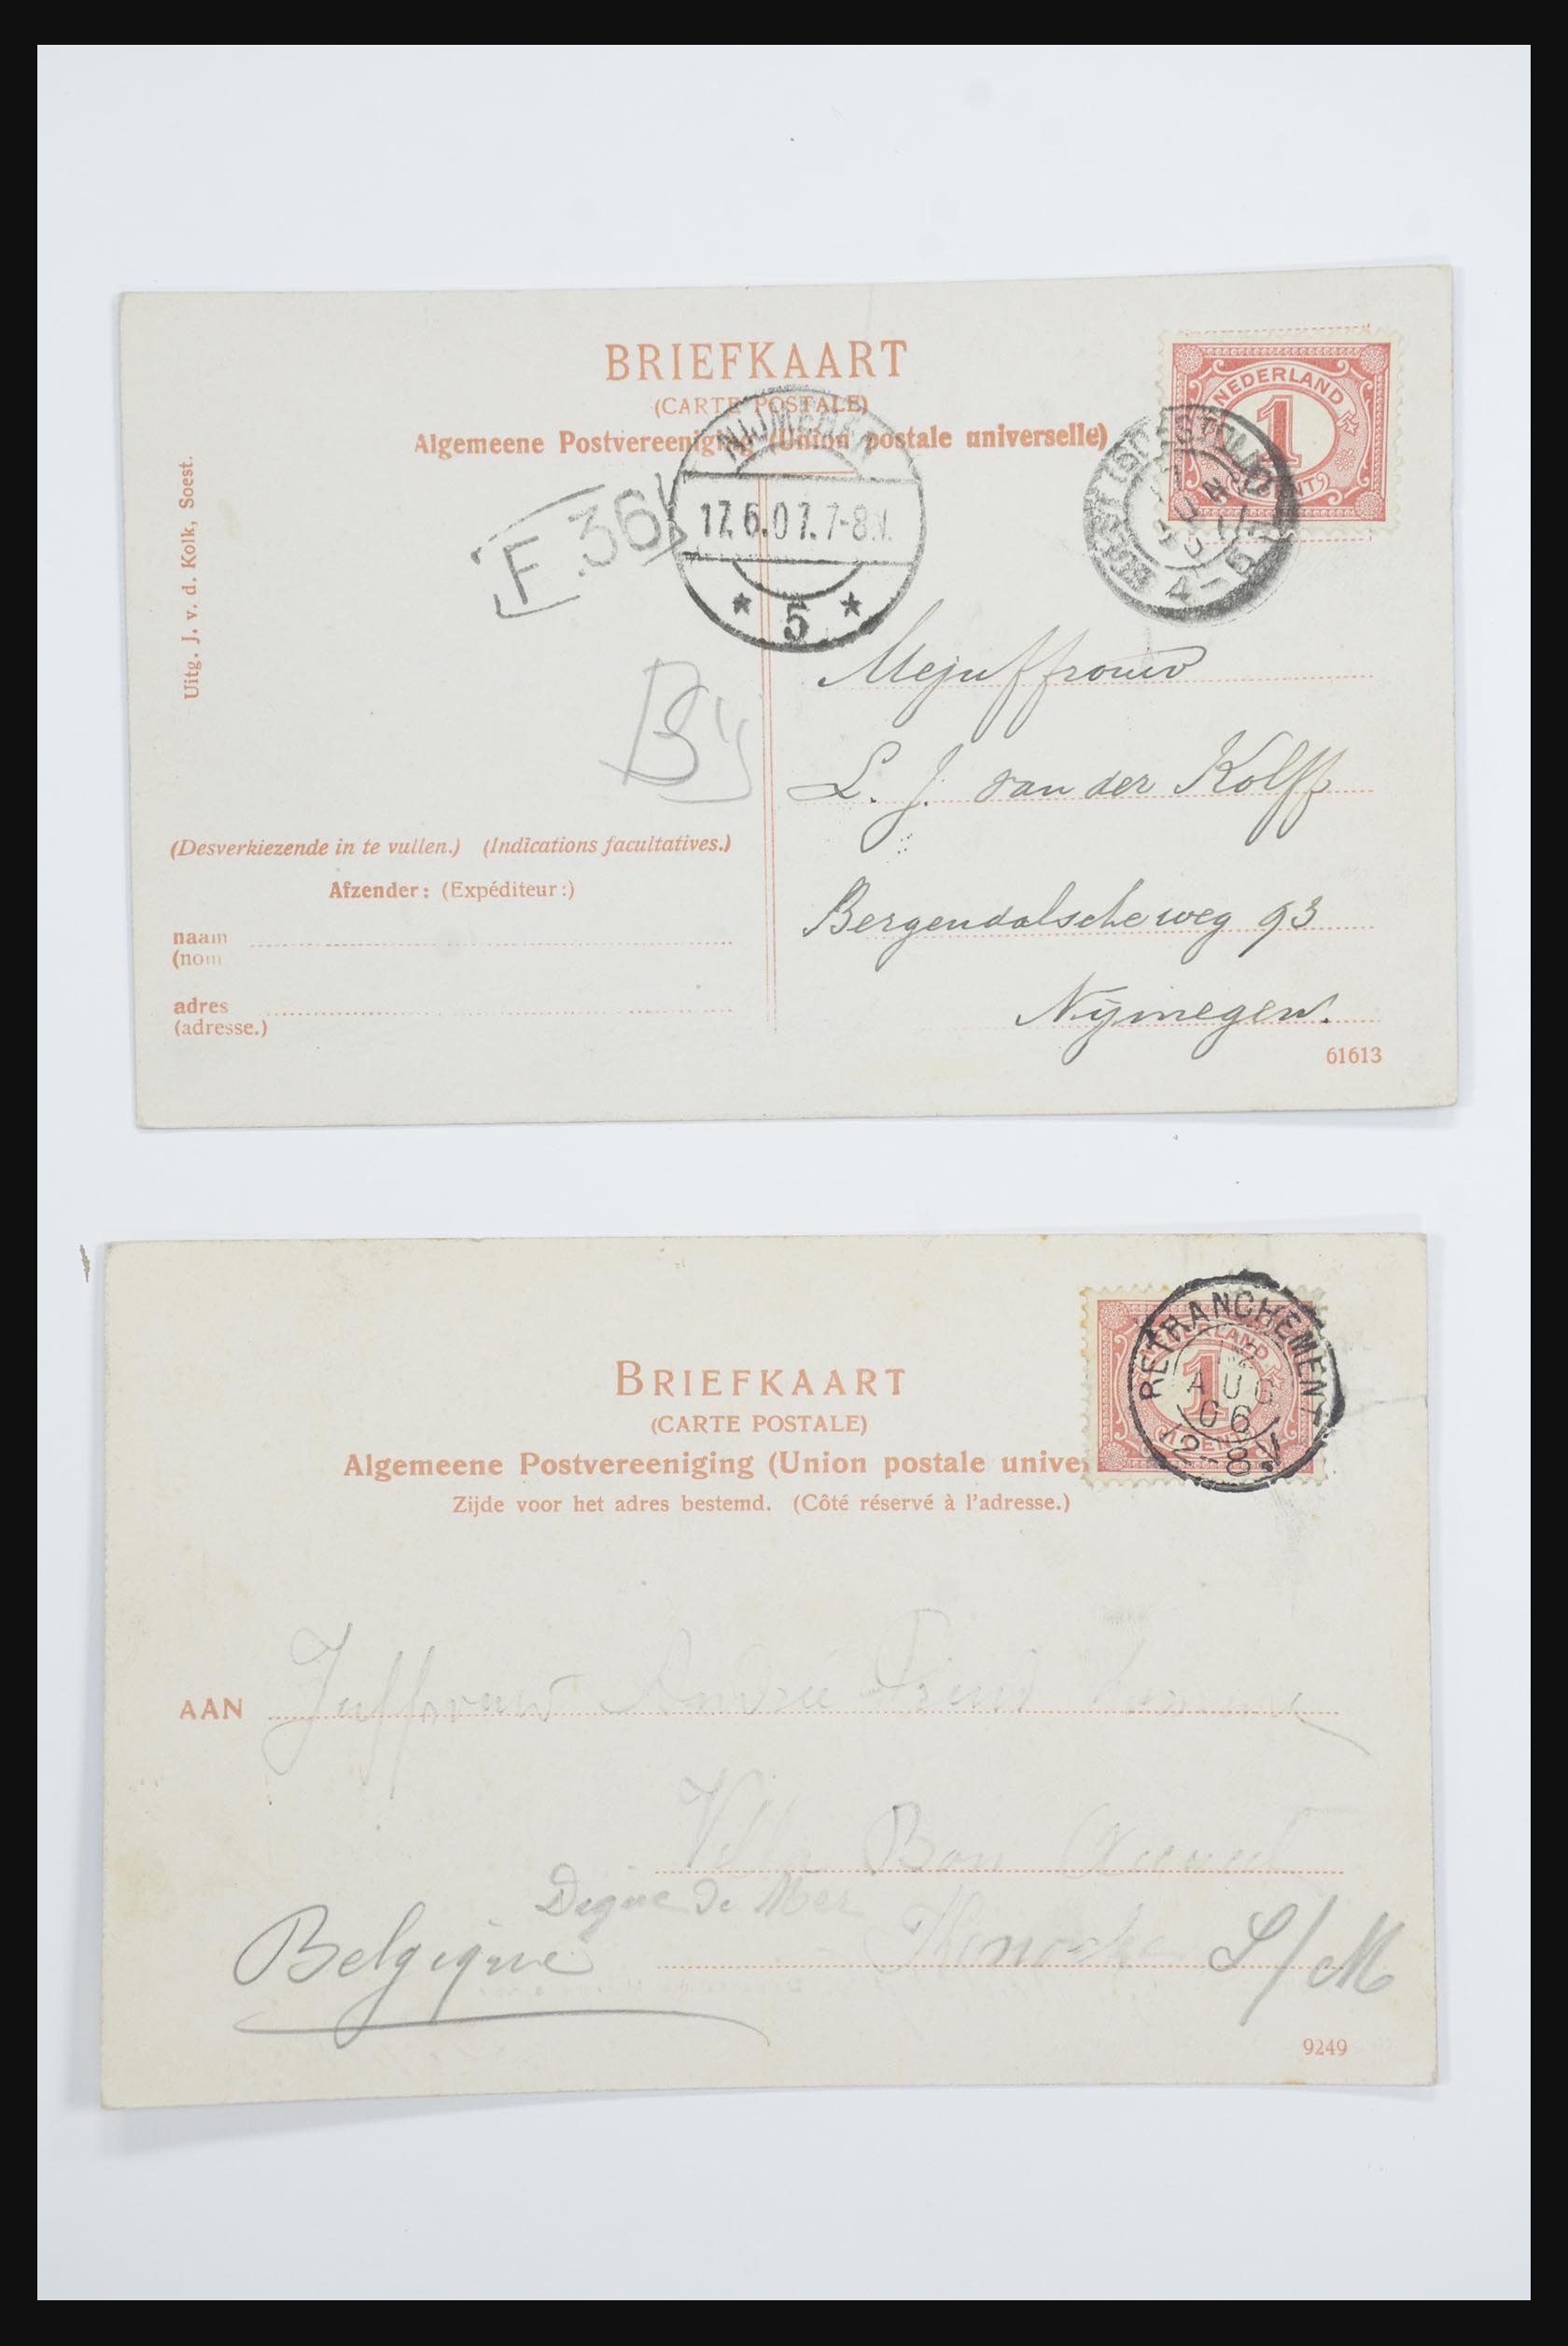 31668 061 - 31668 Netherlands picture postcards 1905-1935.